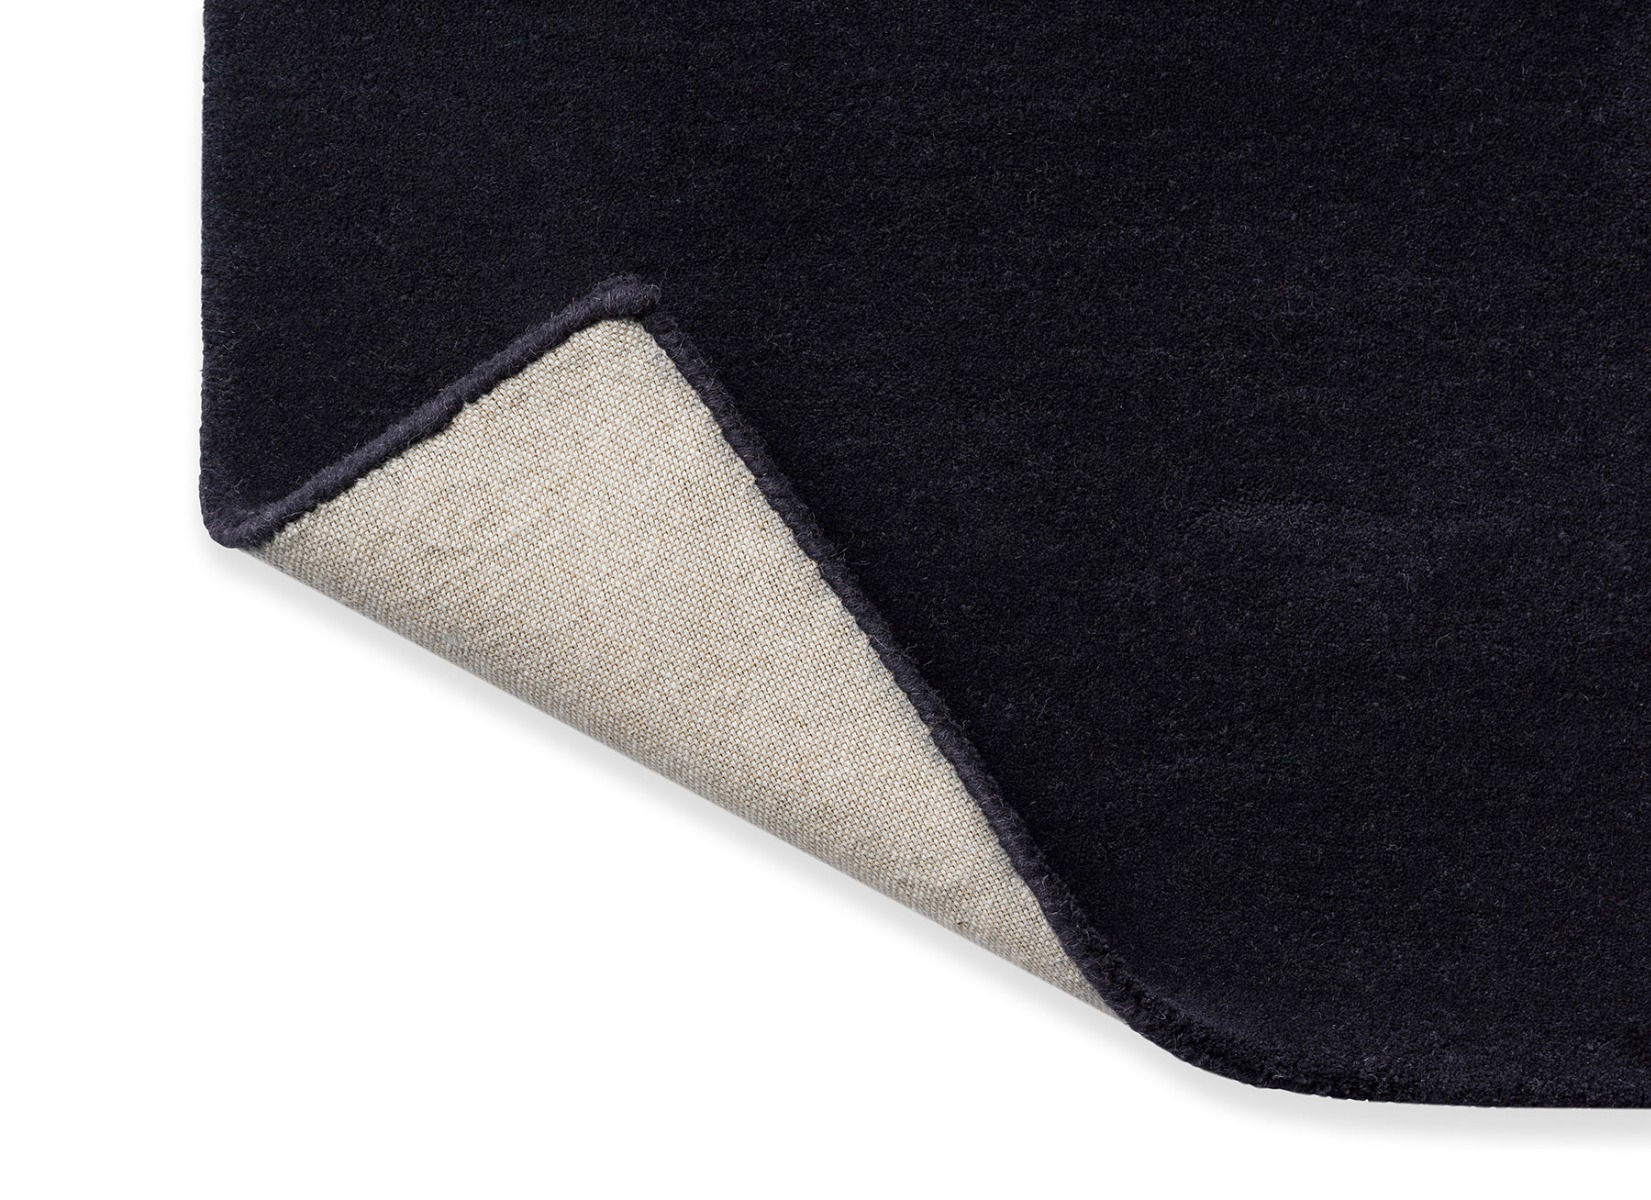 Decor Bruta Off-Black Handwoven Rug ☞ Size: 5' 3" x 7' 7" (160 x 230 cm)